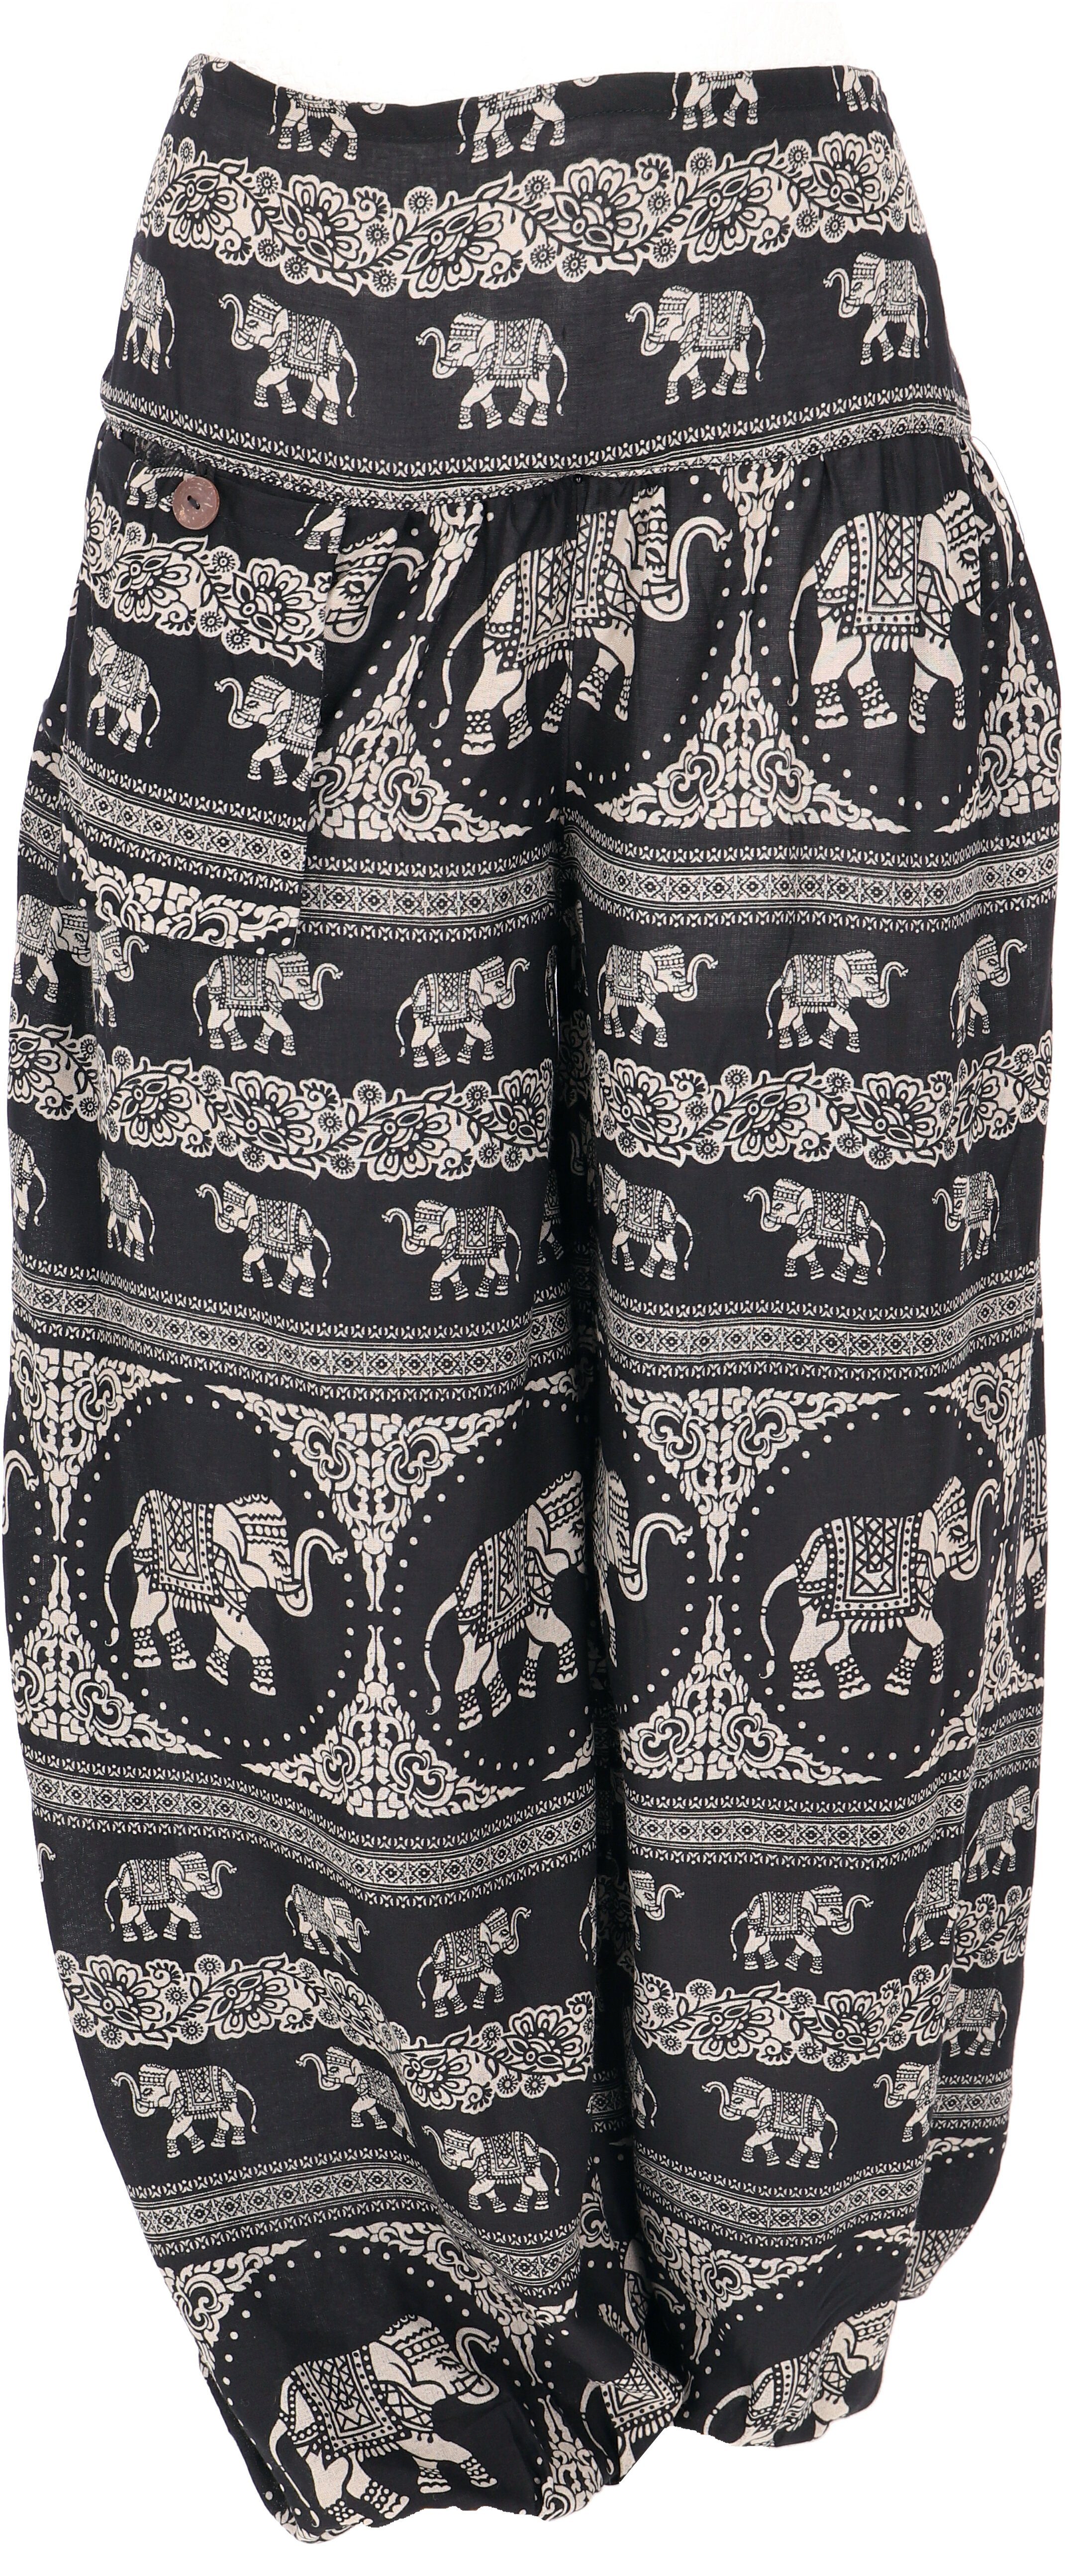 Guru-Shop Relaxhose Luftige Pluderhose mit Elefantendruck,.. Ethno Style, alternative Bekleidung schwarz